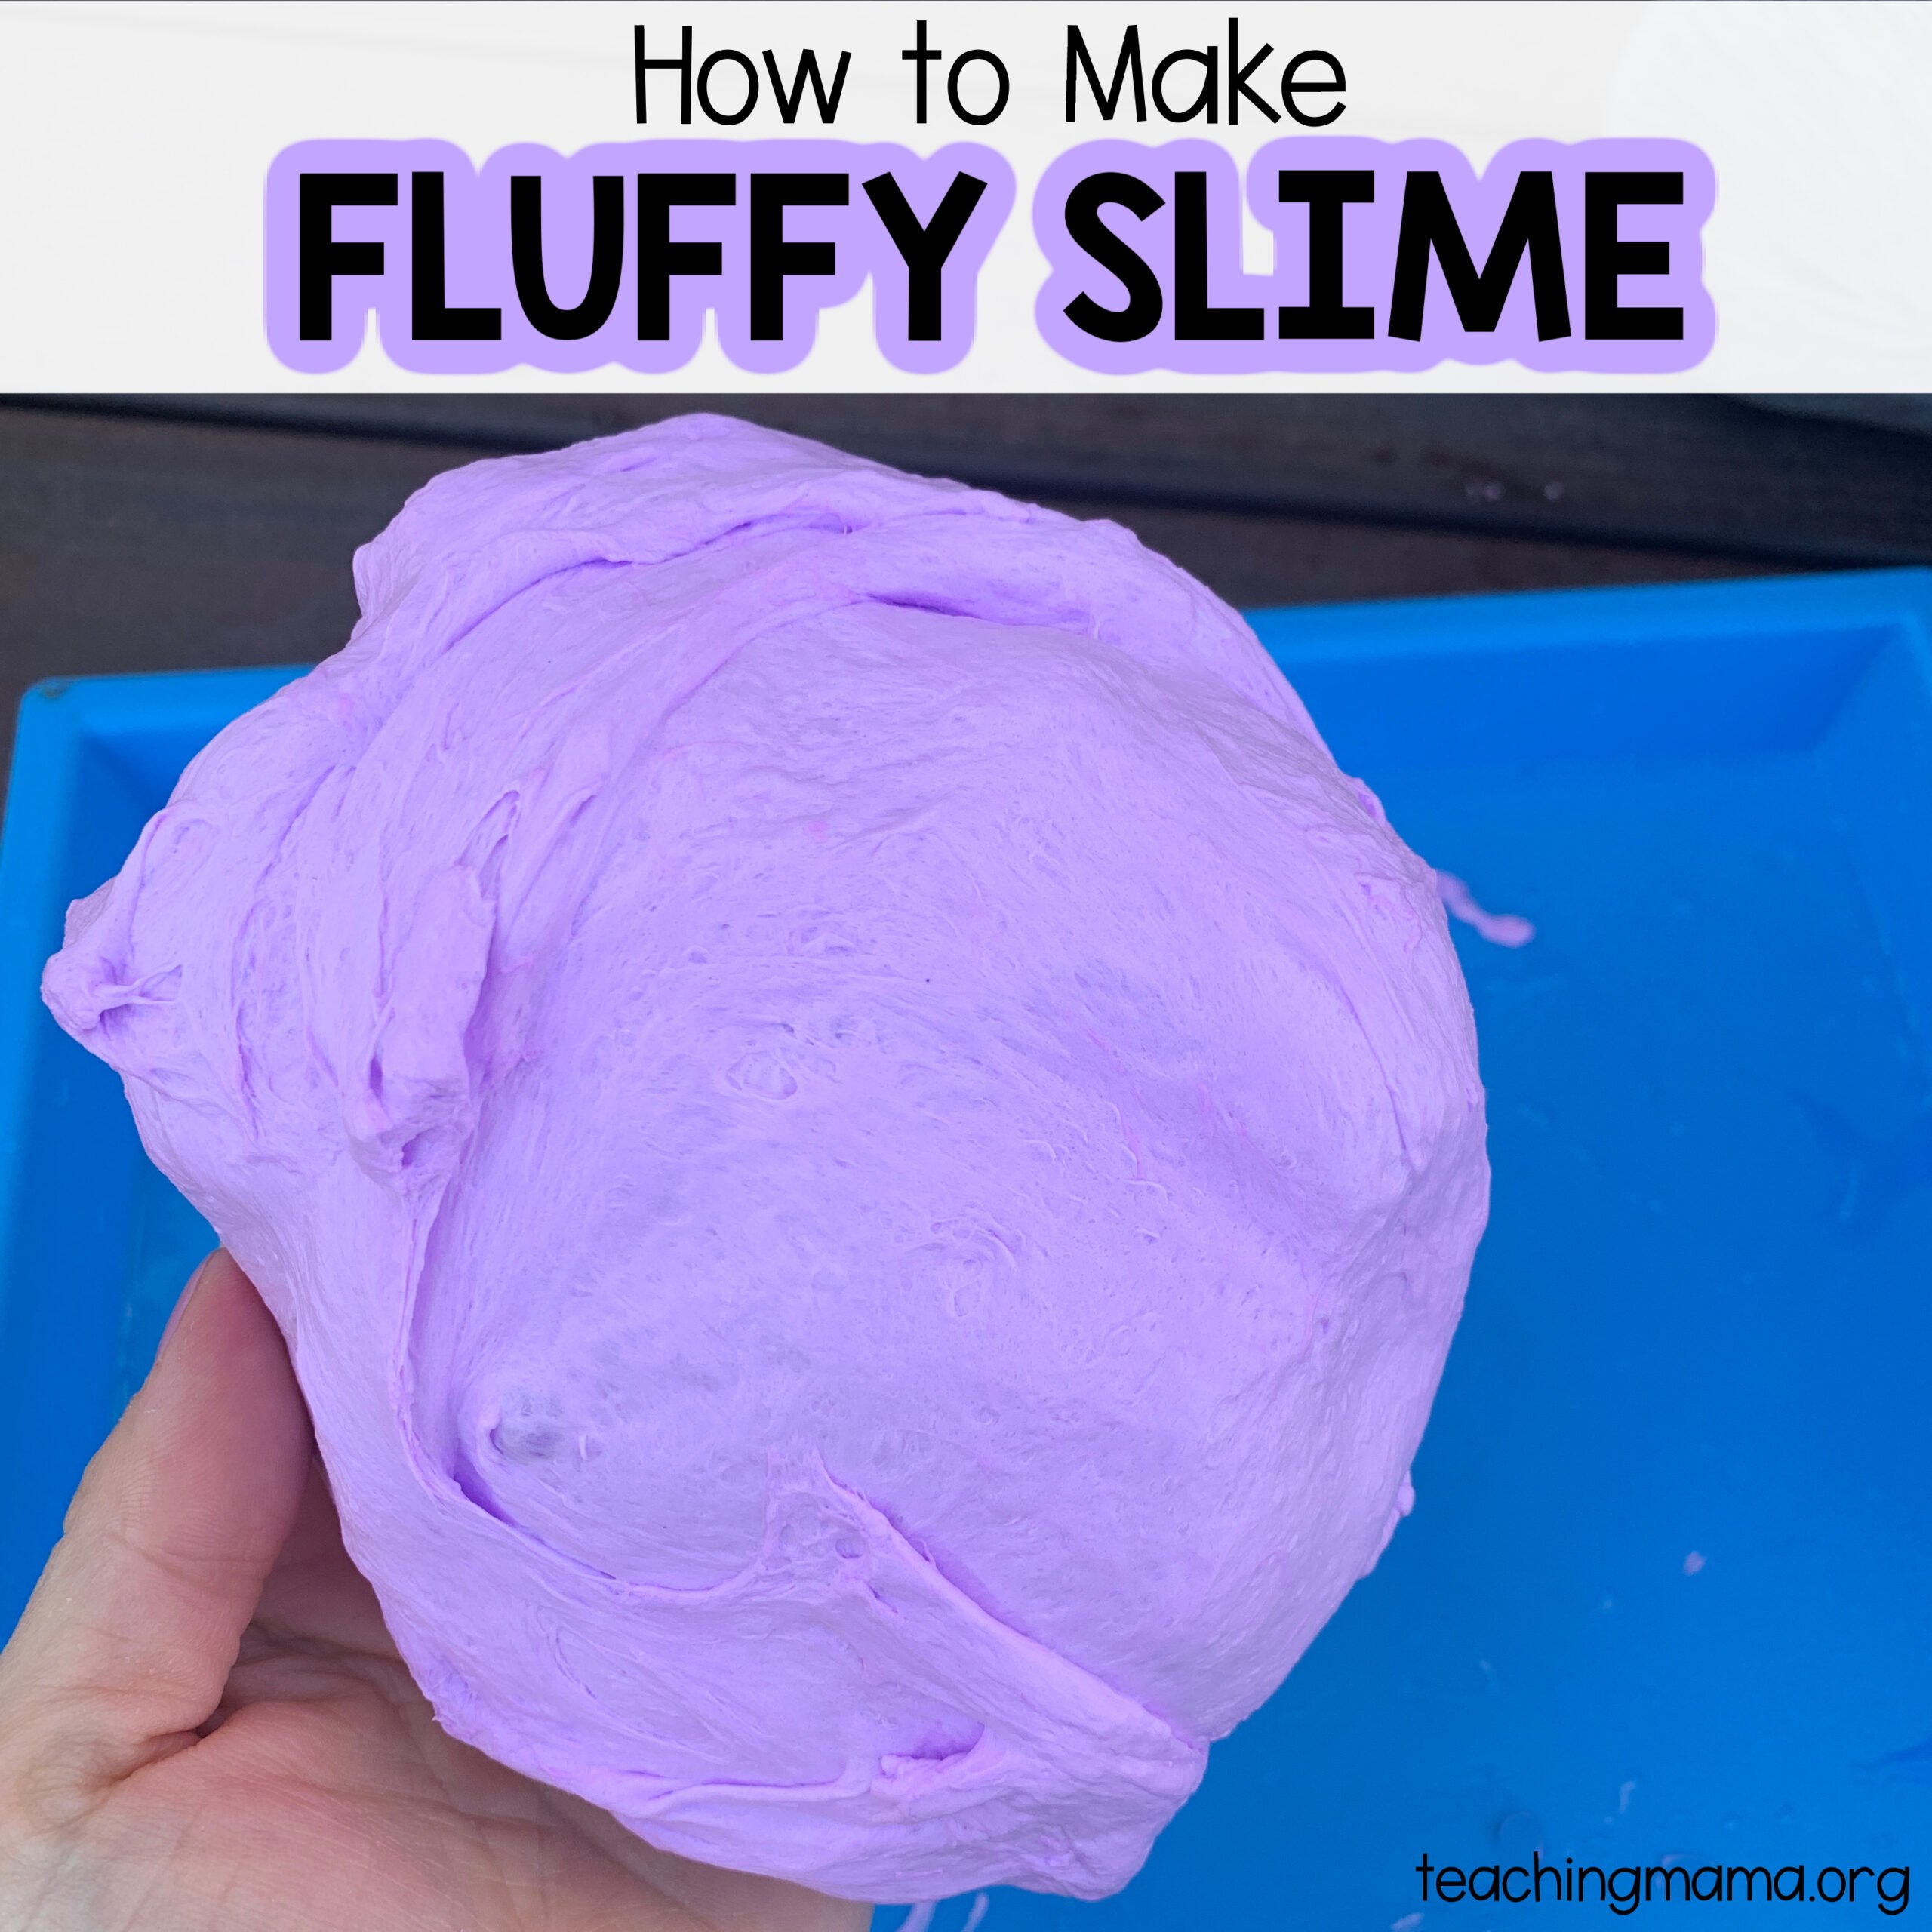 https://teachingmama.org/wp-content/uploads/2022/03/how-to-make-fluffy-slime-scaled.jpg